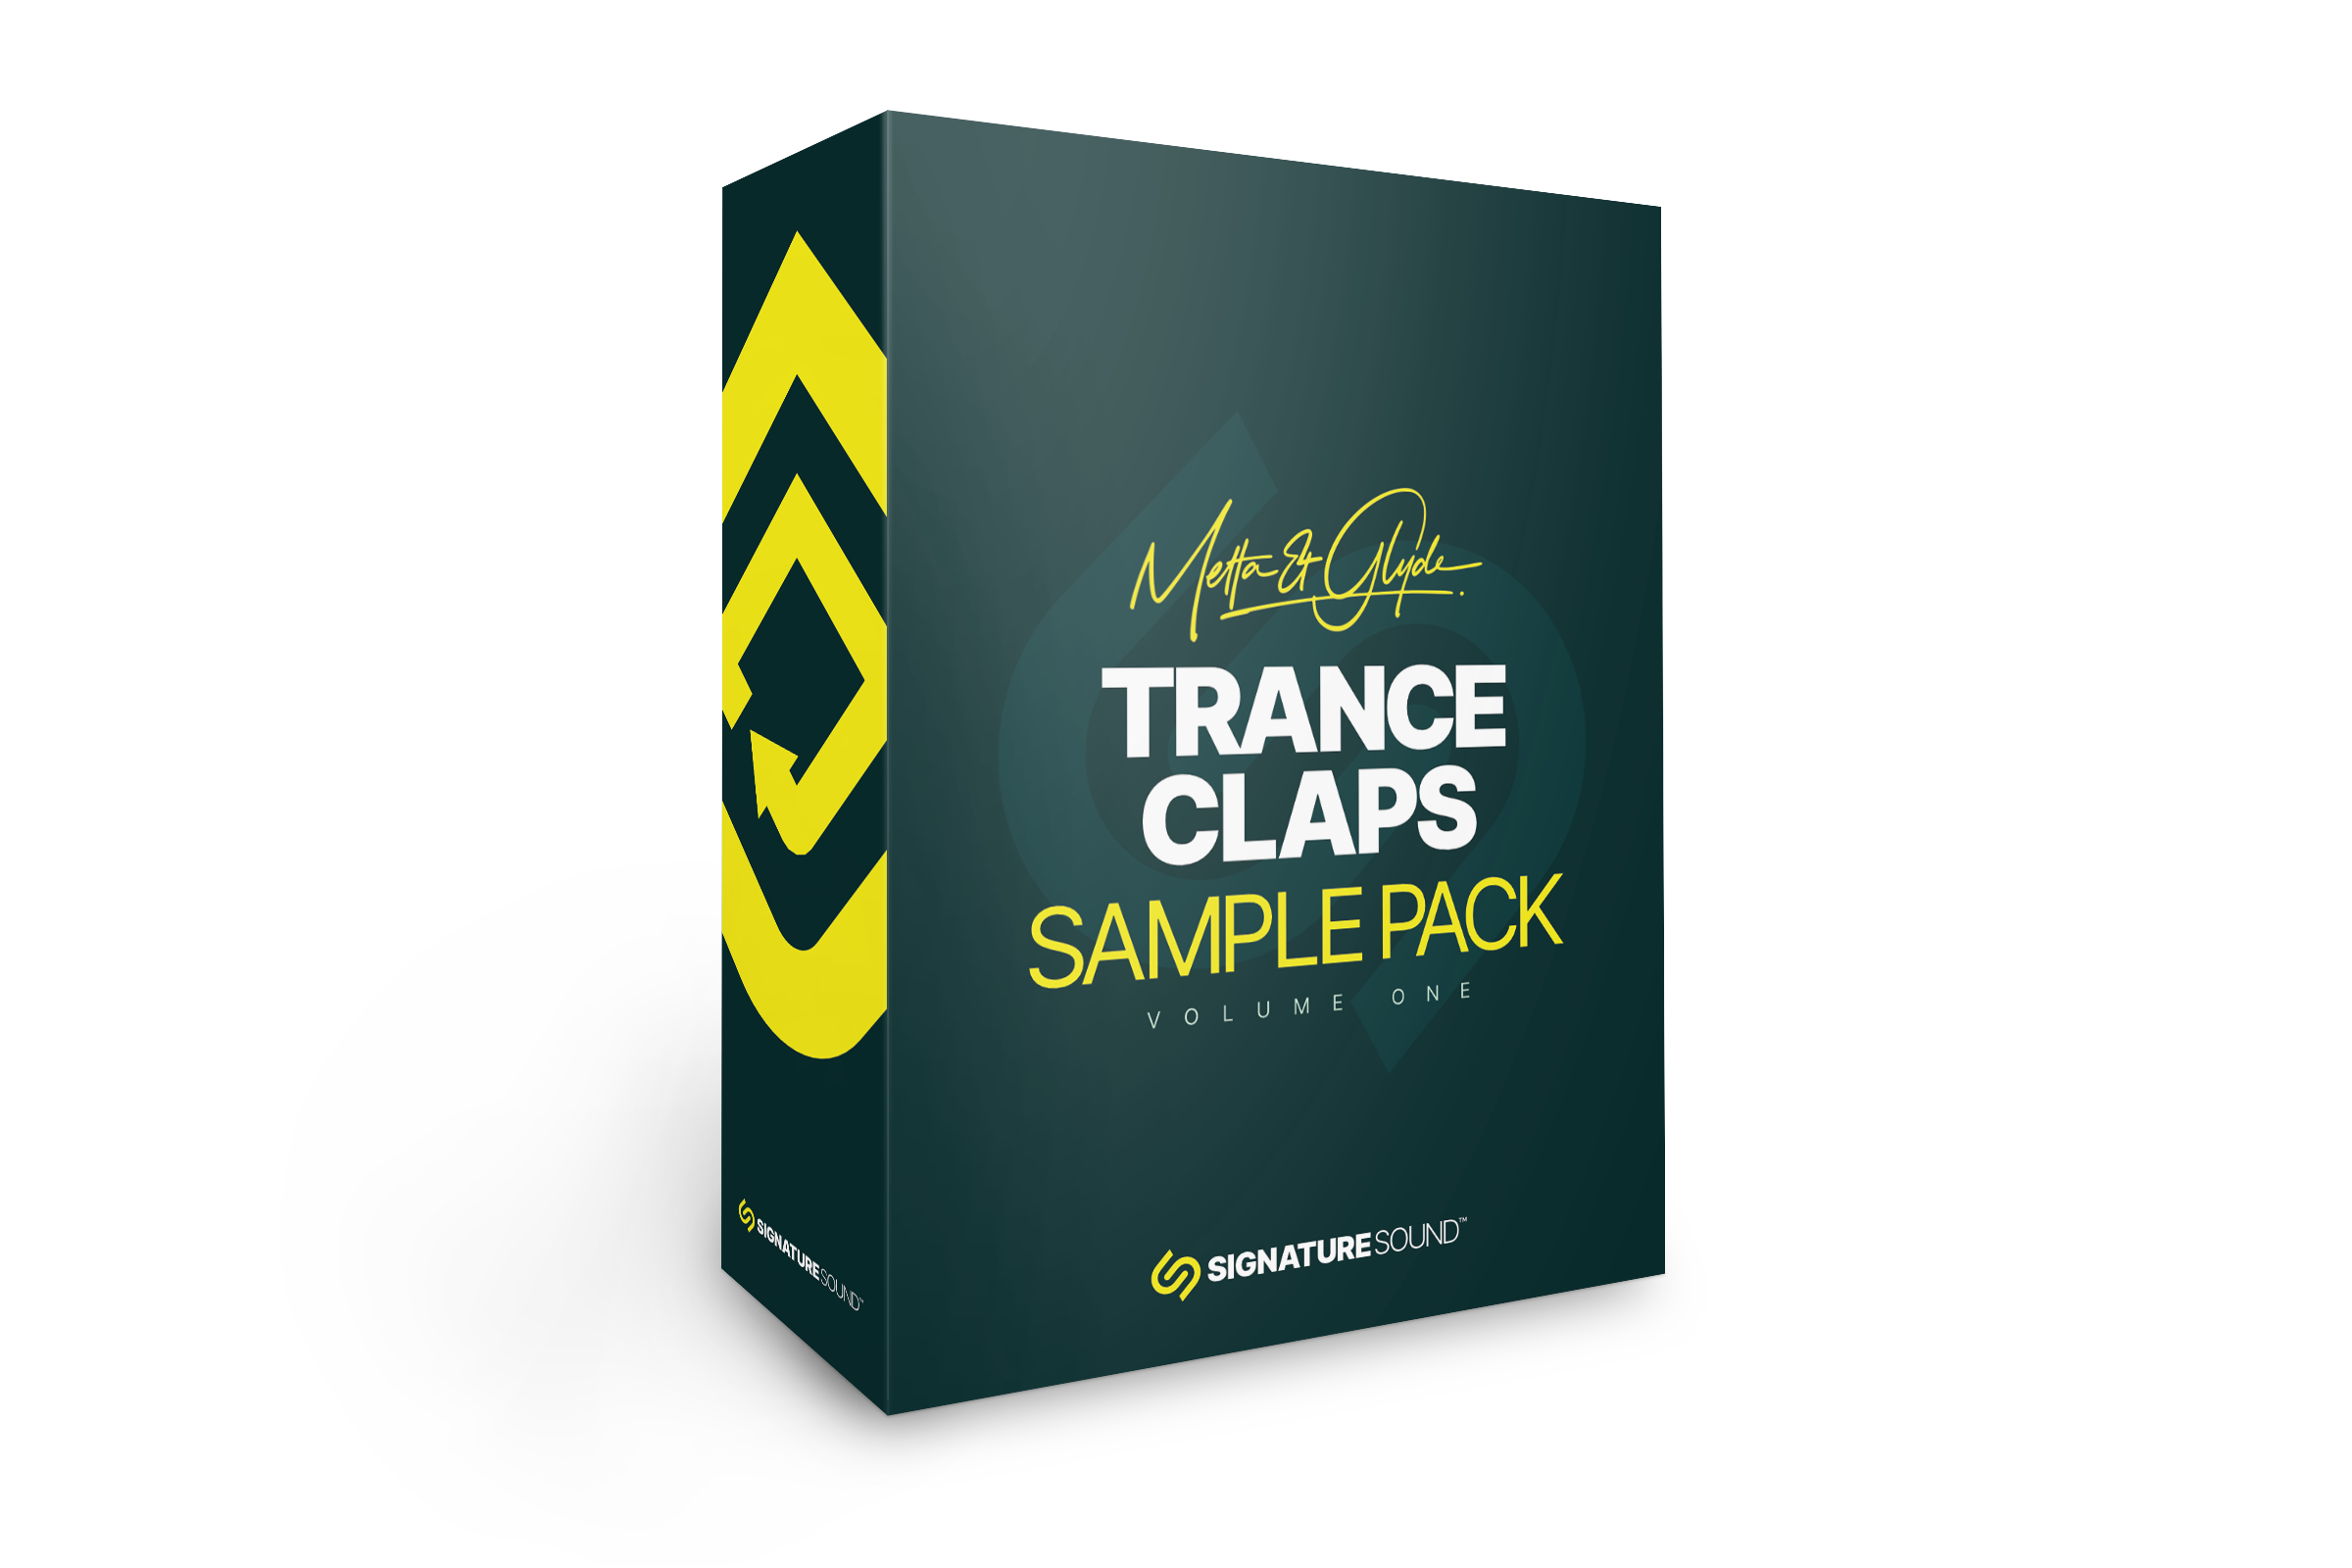 Metta & Glyde Trance Claps [Sample Pack] Volume One